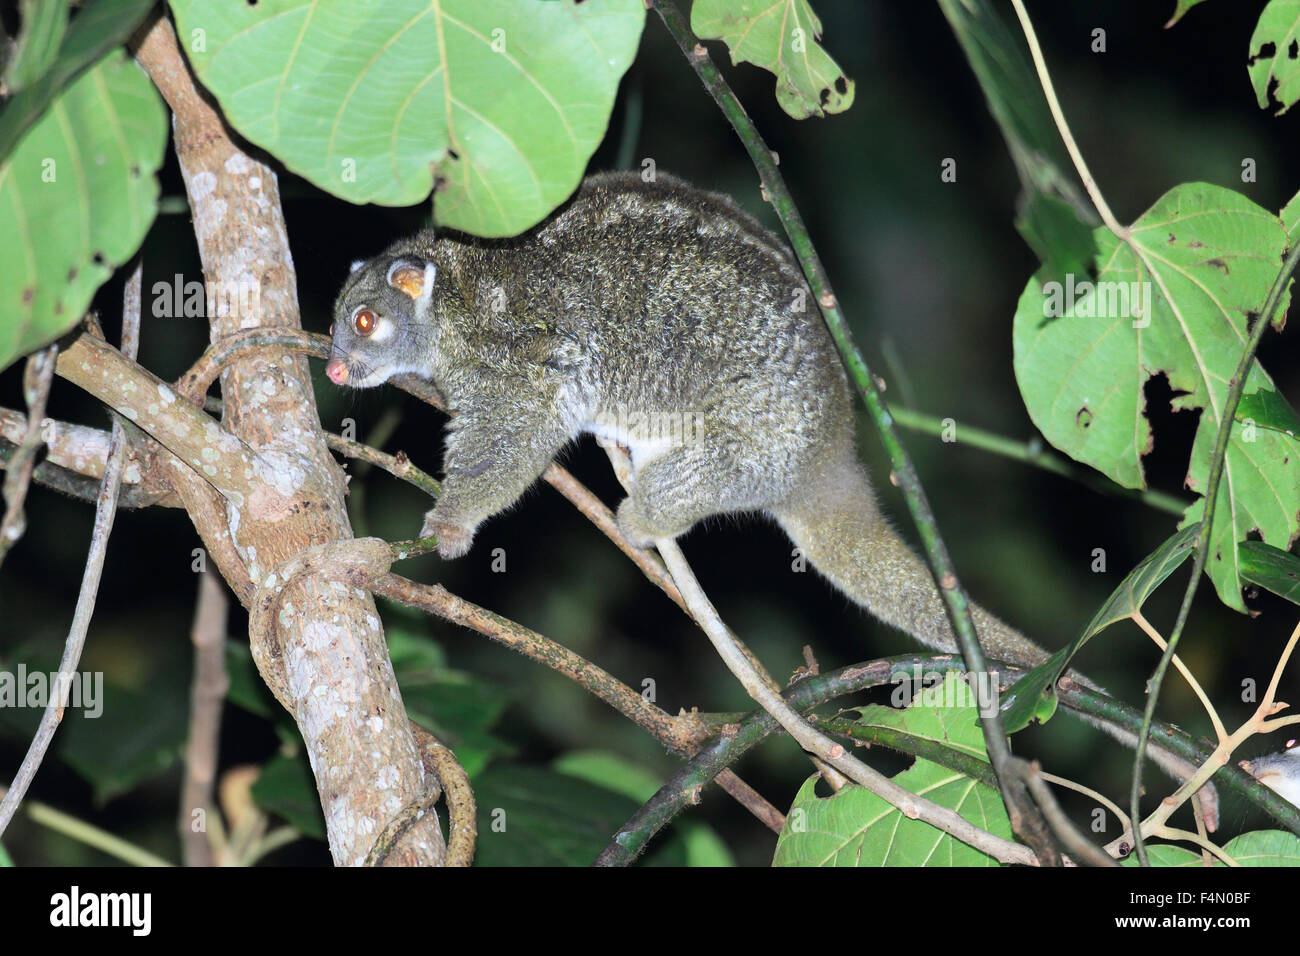 Green Ringtail Possum (Pseudochirops archeri) in Australia Stock Photo